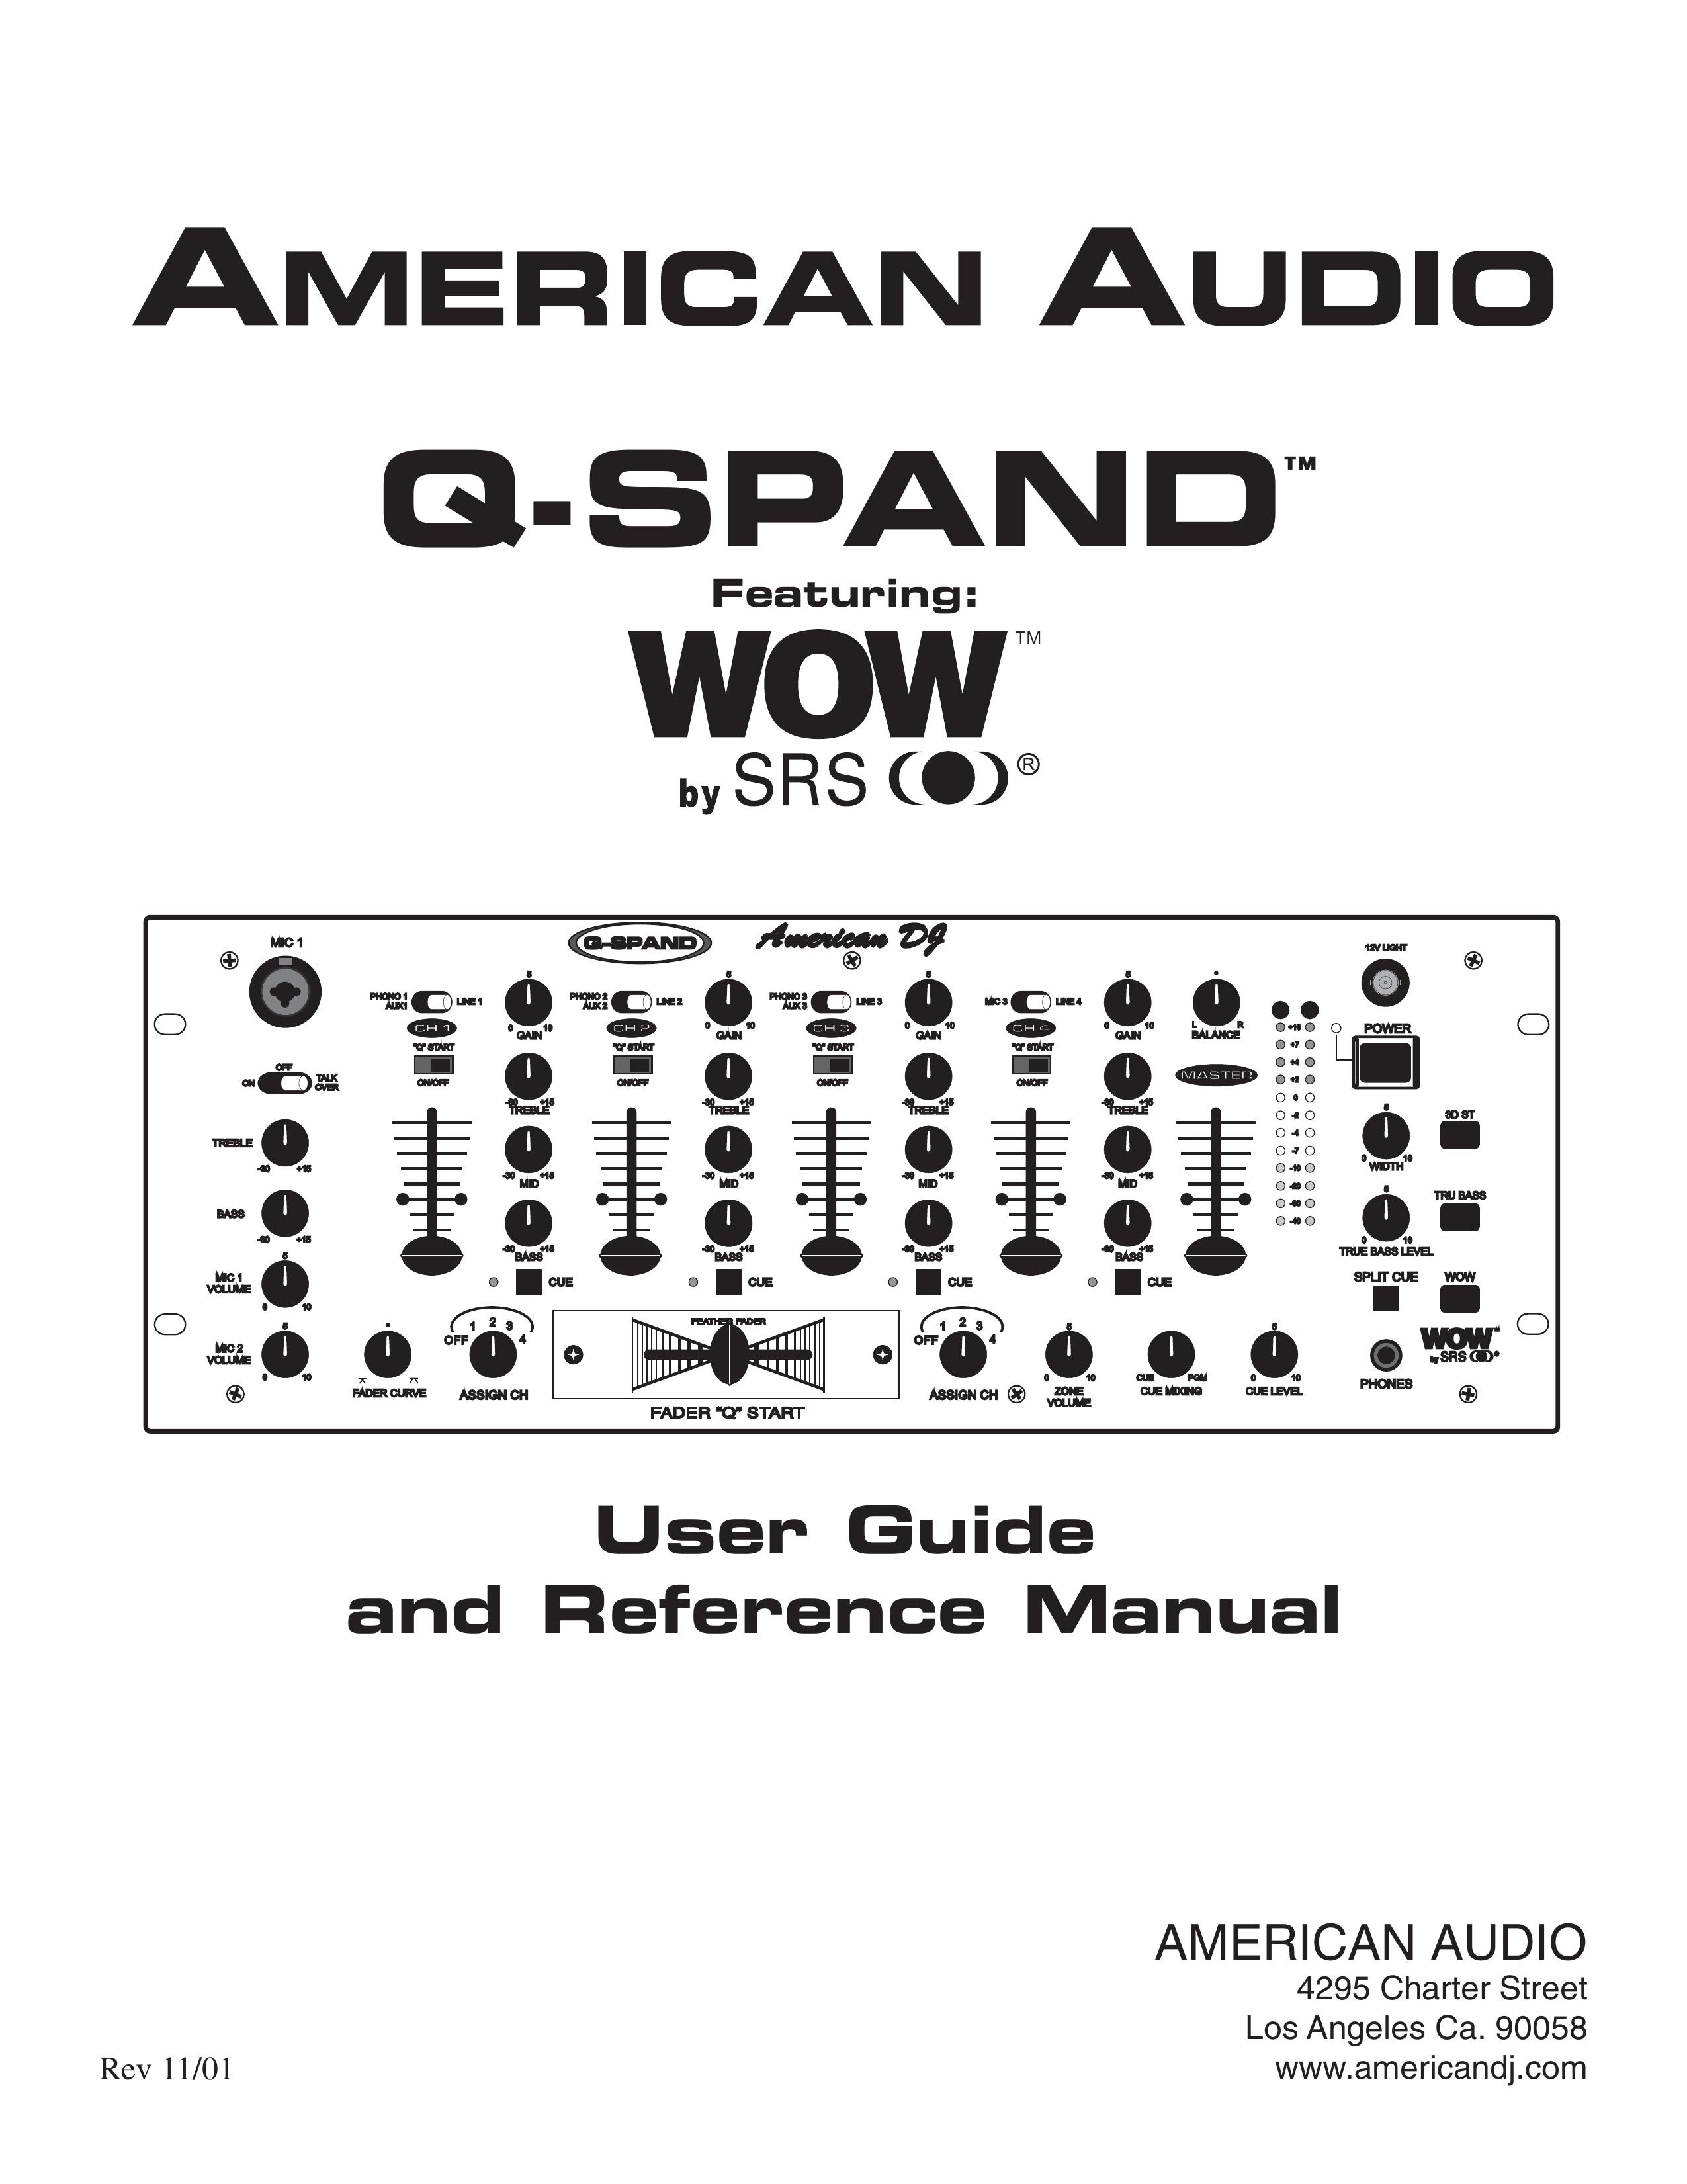 American Audio Q-SPAND DJ Equipment User Manual (Page 1)